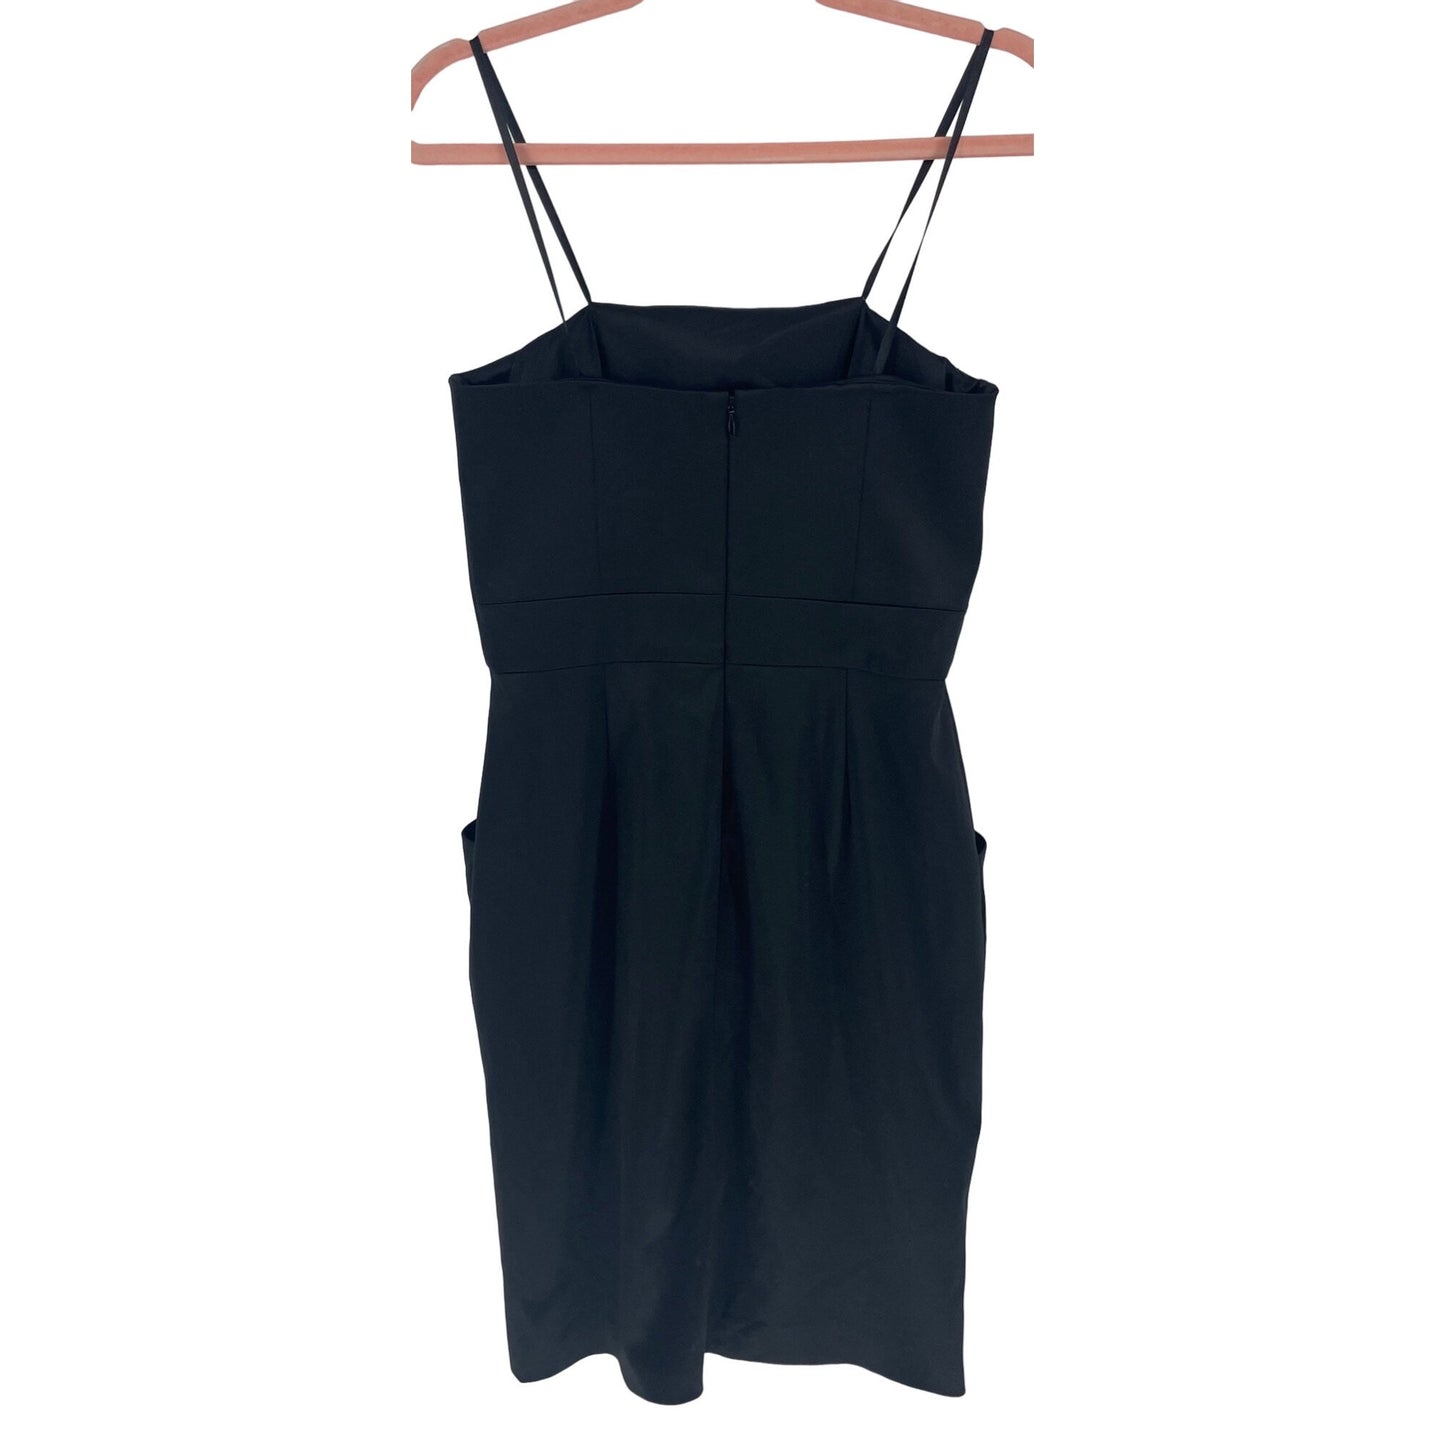 BCBG Paris Women's Size 6 Black Satin Strapless Sheath Dress W/ Pockets